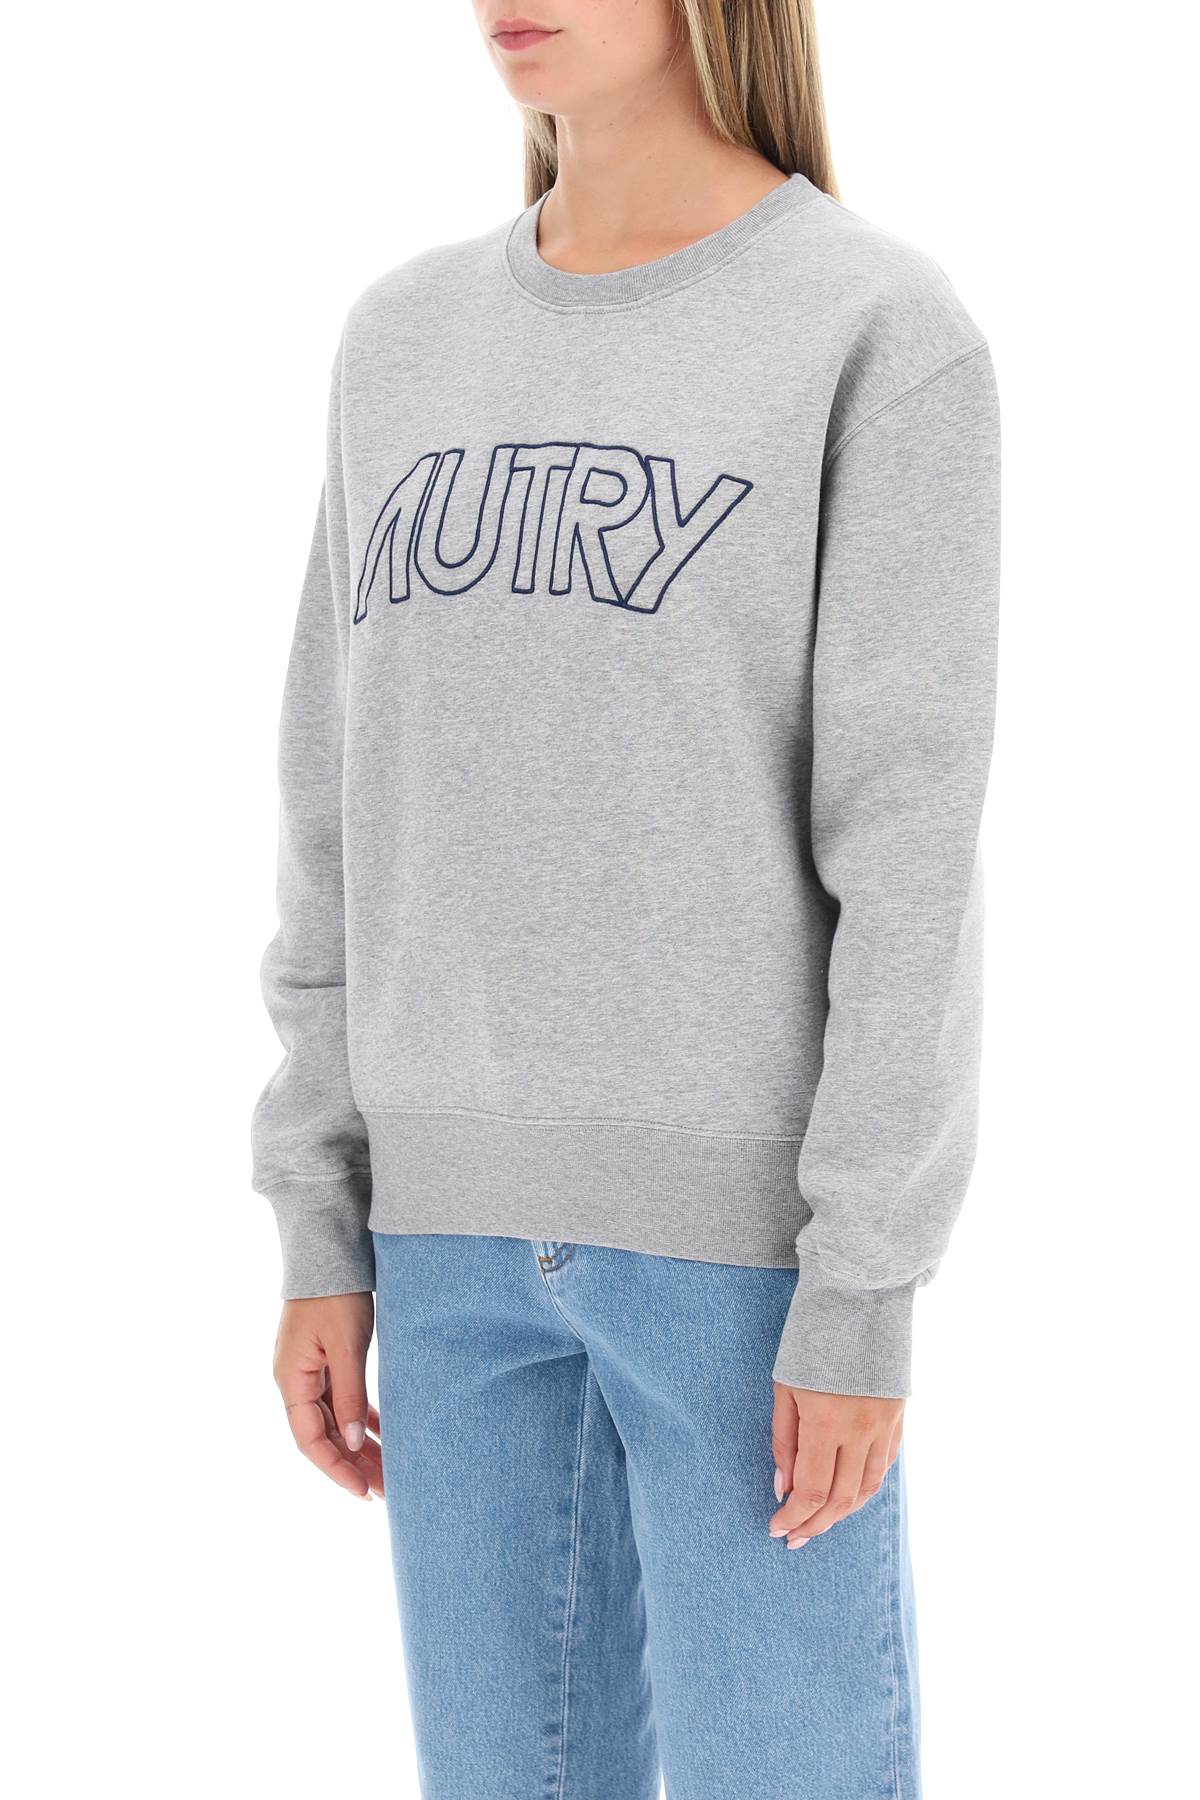 Autry crew-neck sweatshirt with logo embroidery-3